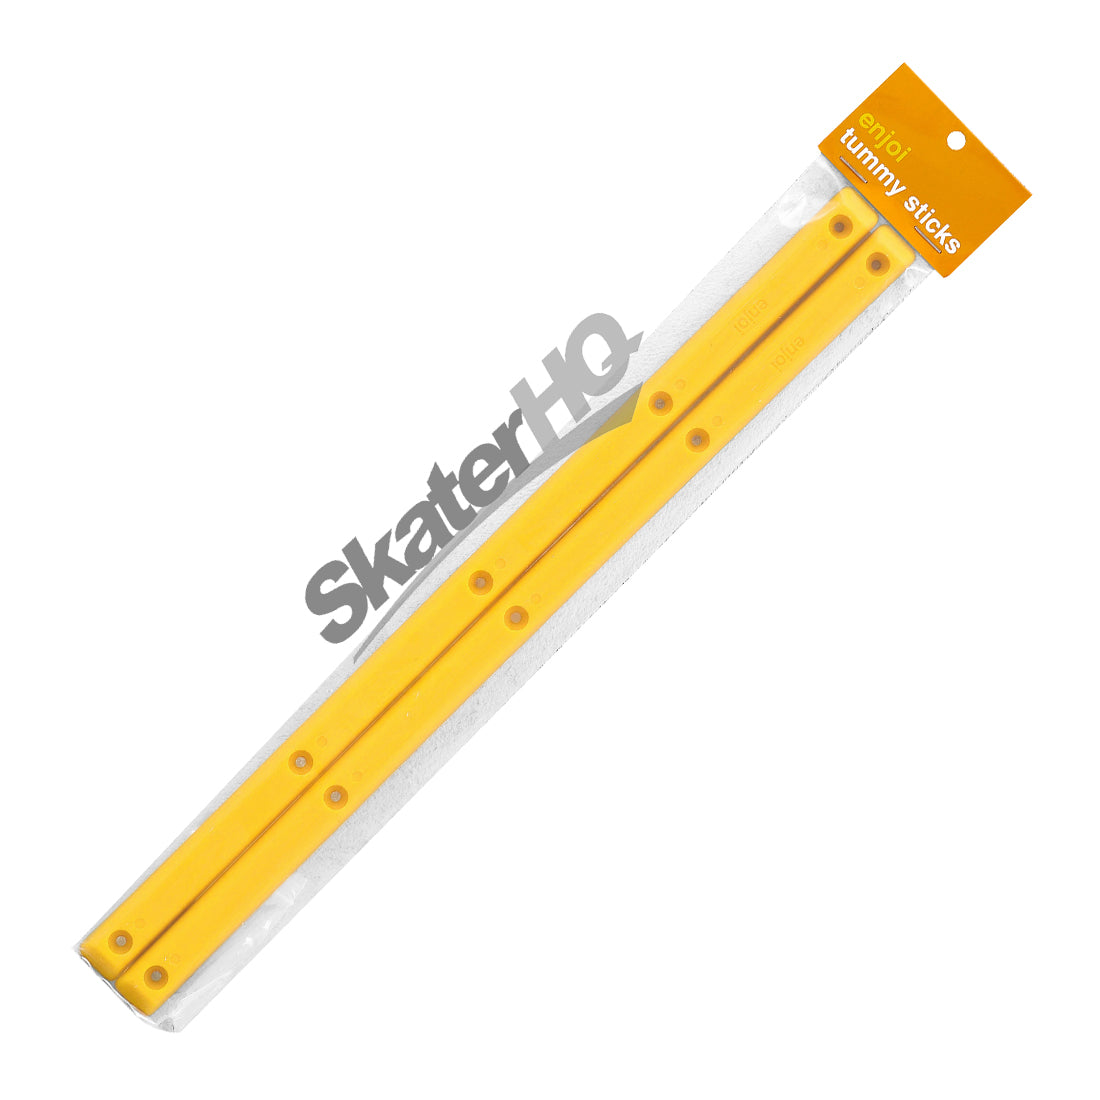 Enjoi Tummy Sticks Skate Rails 2pk - Yellow Skateboard Hardware and Parts